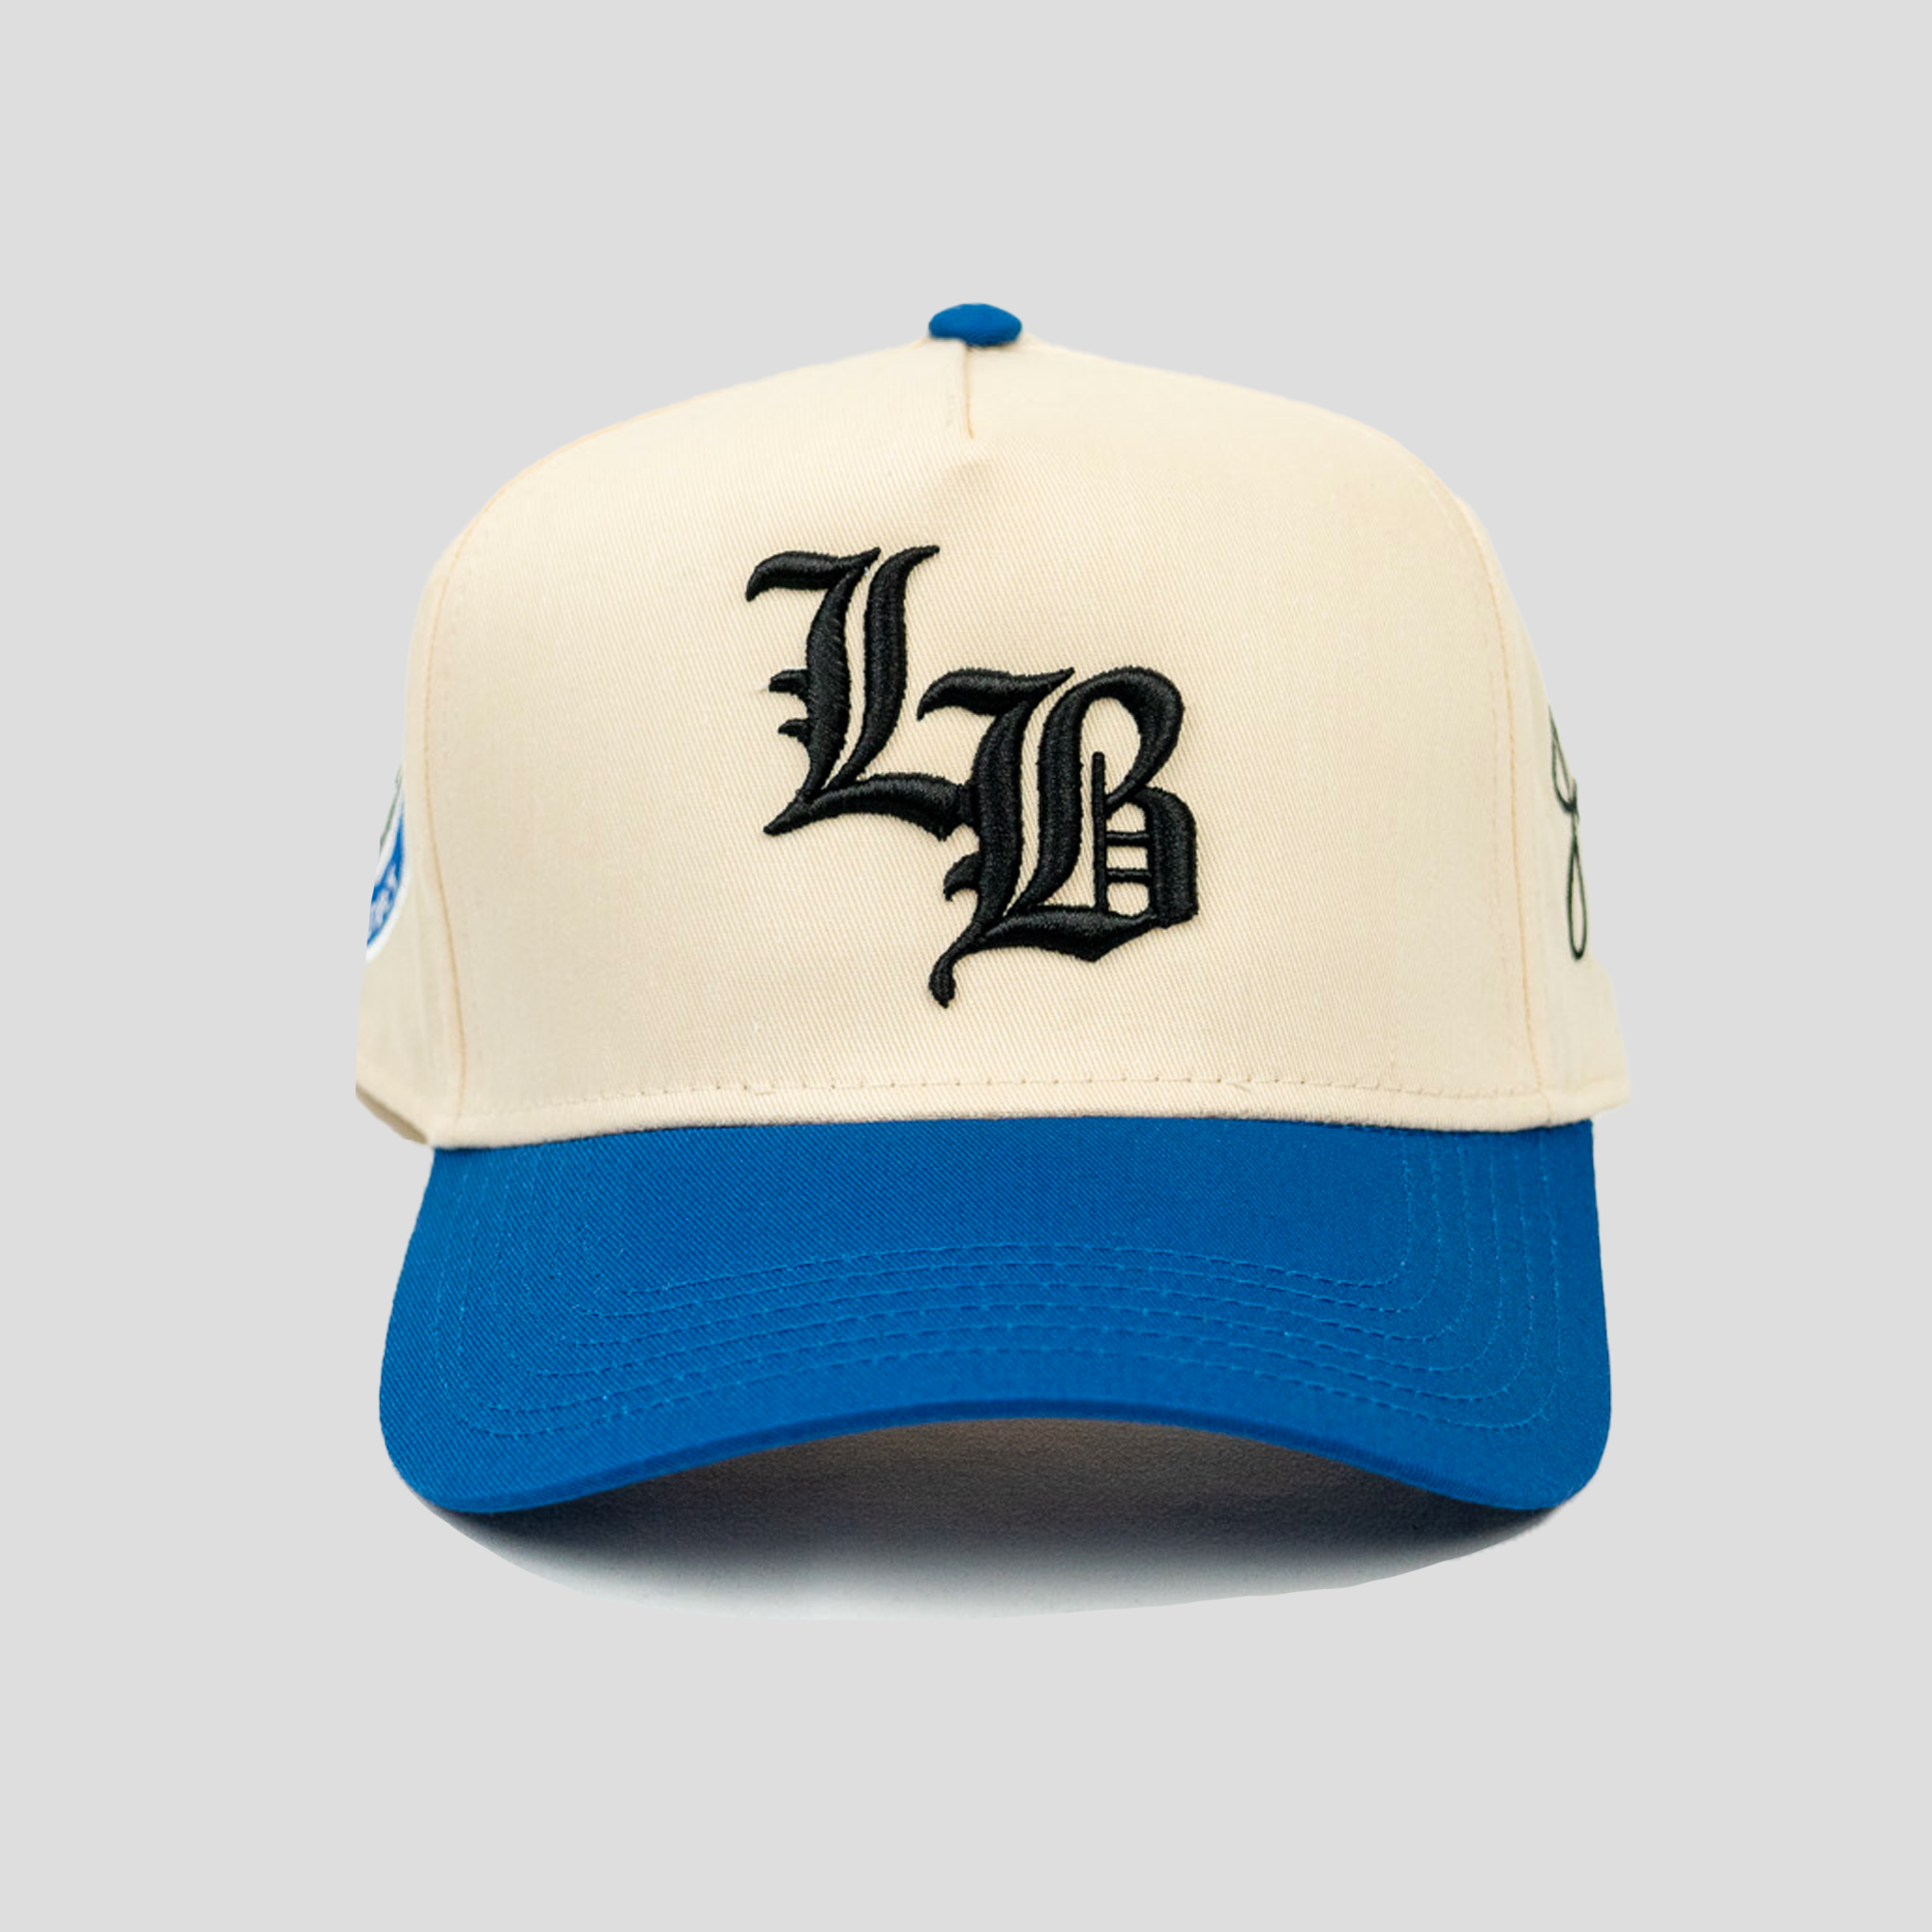 Jrip x LB Snapback Hat (CREAM/BLUE)